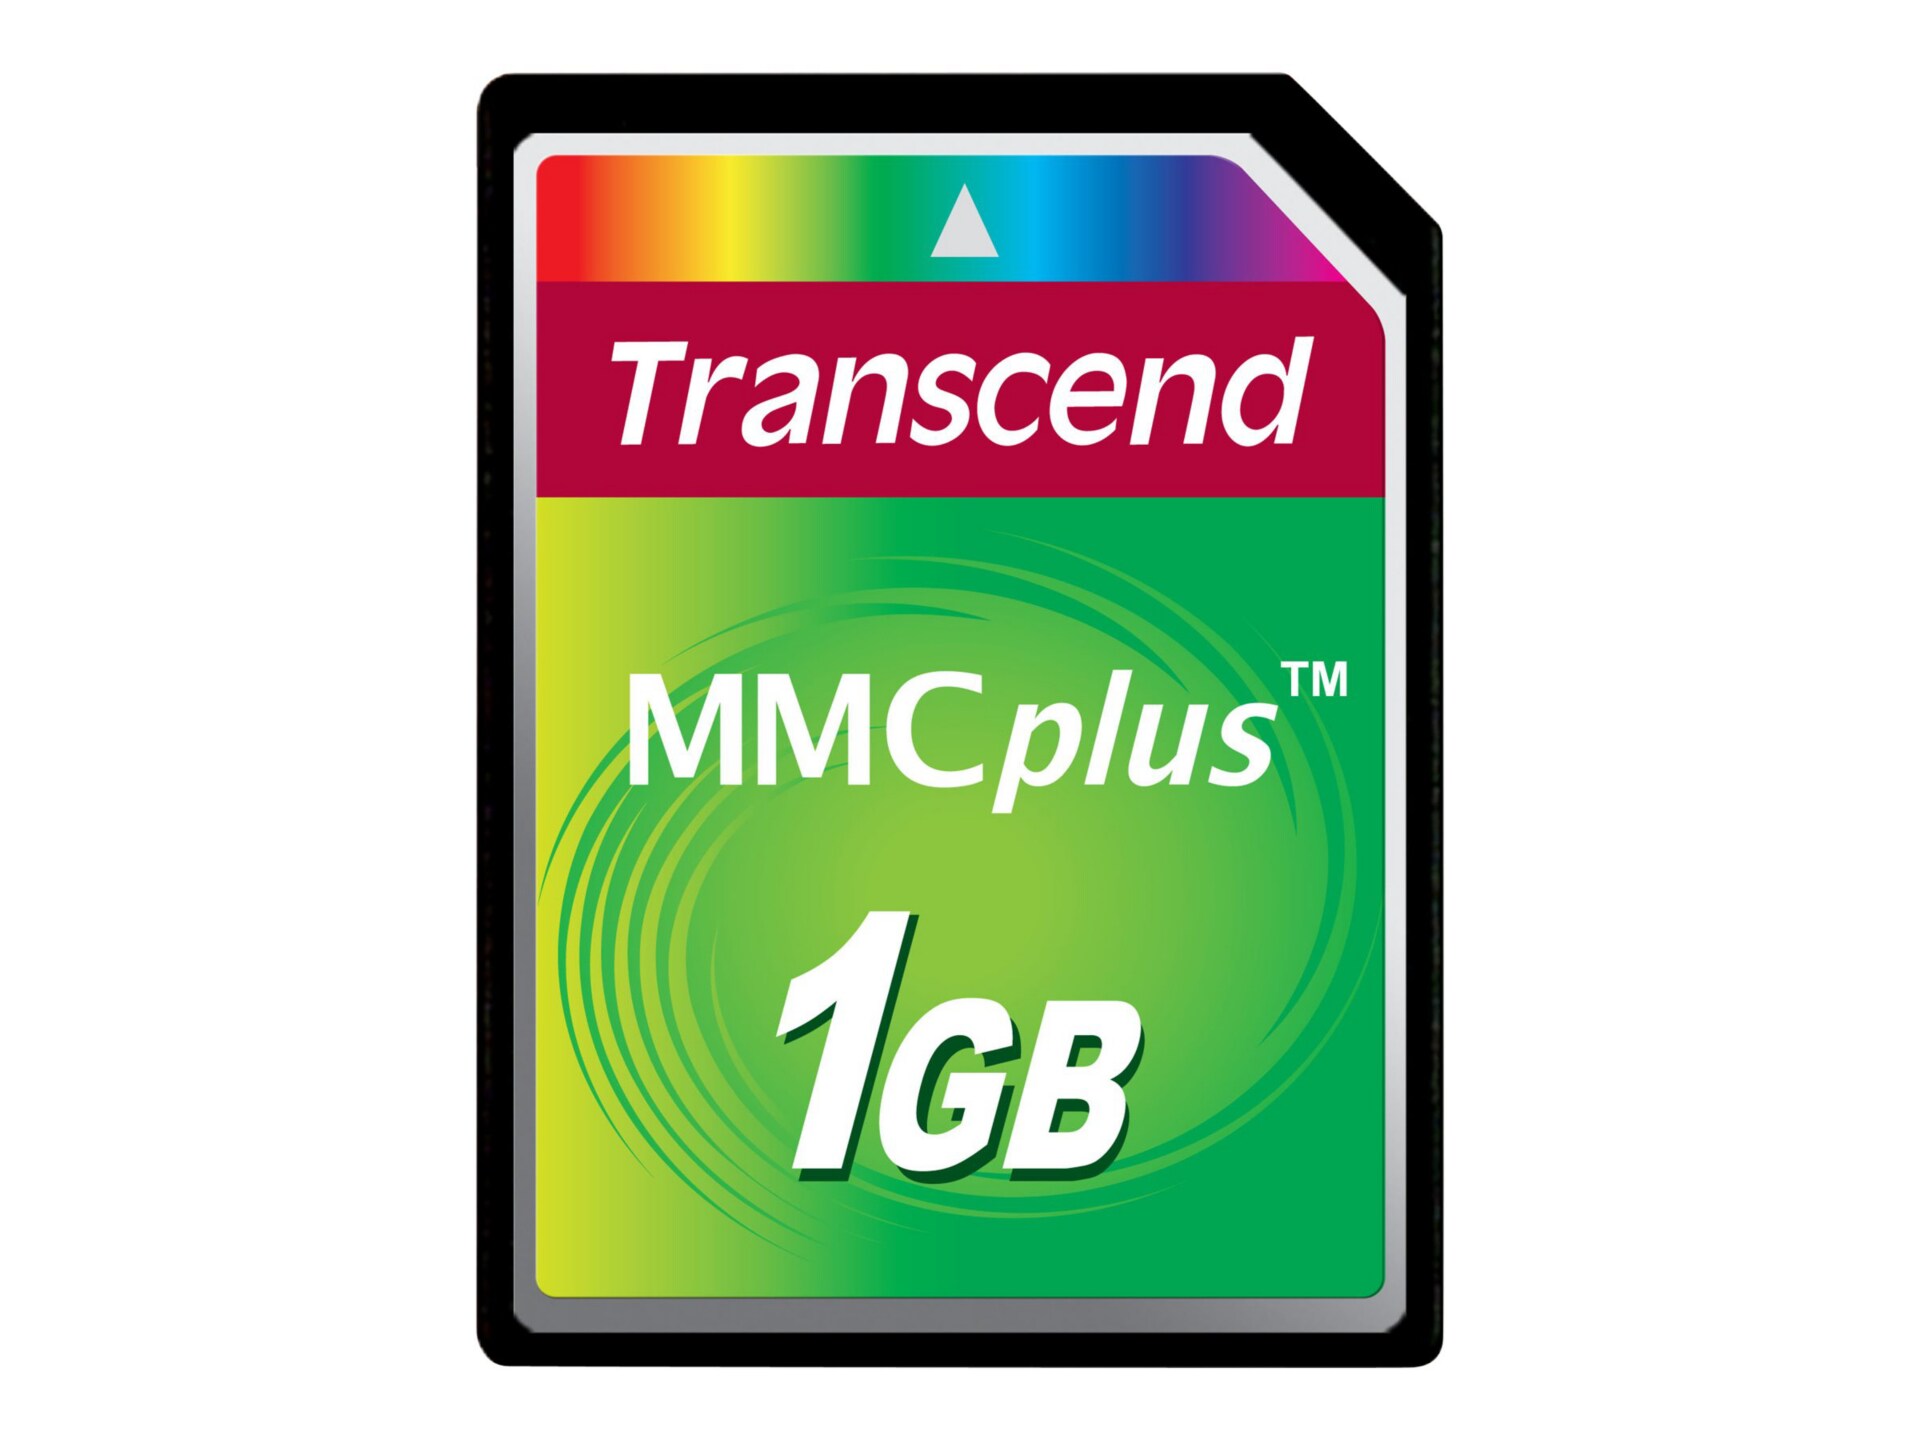 Transcend - flash memory card - 1 GB - MMCplus